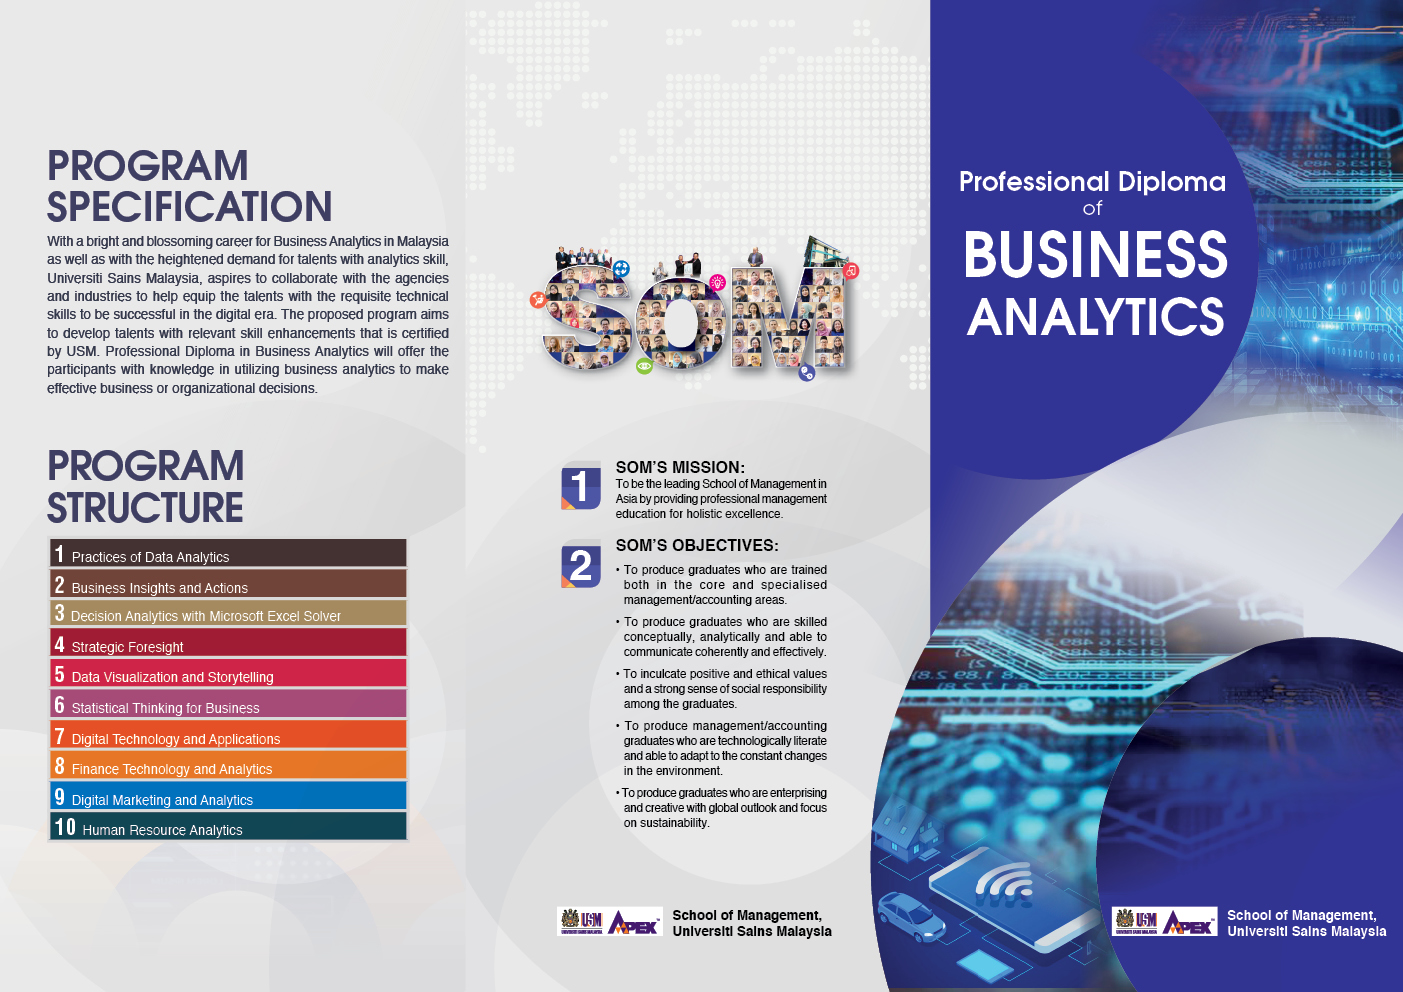 PD Business Analytics 2021